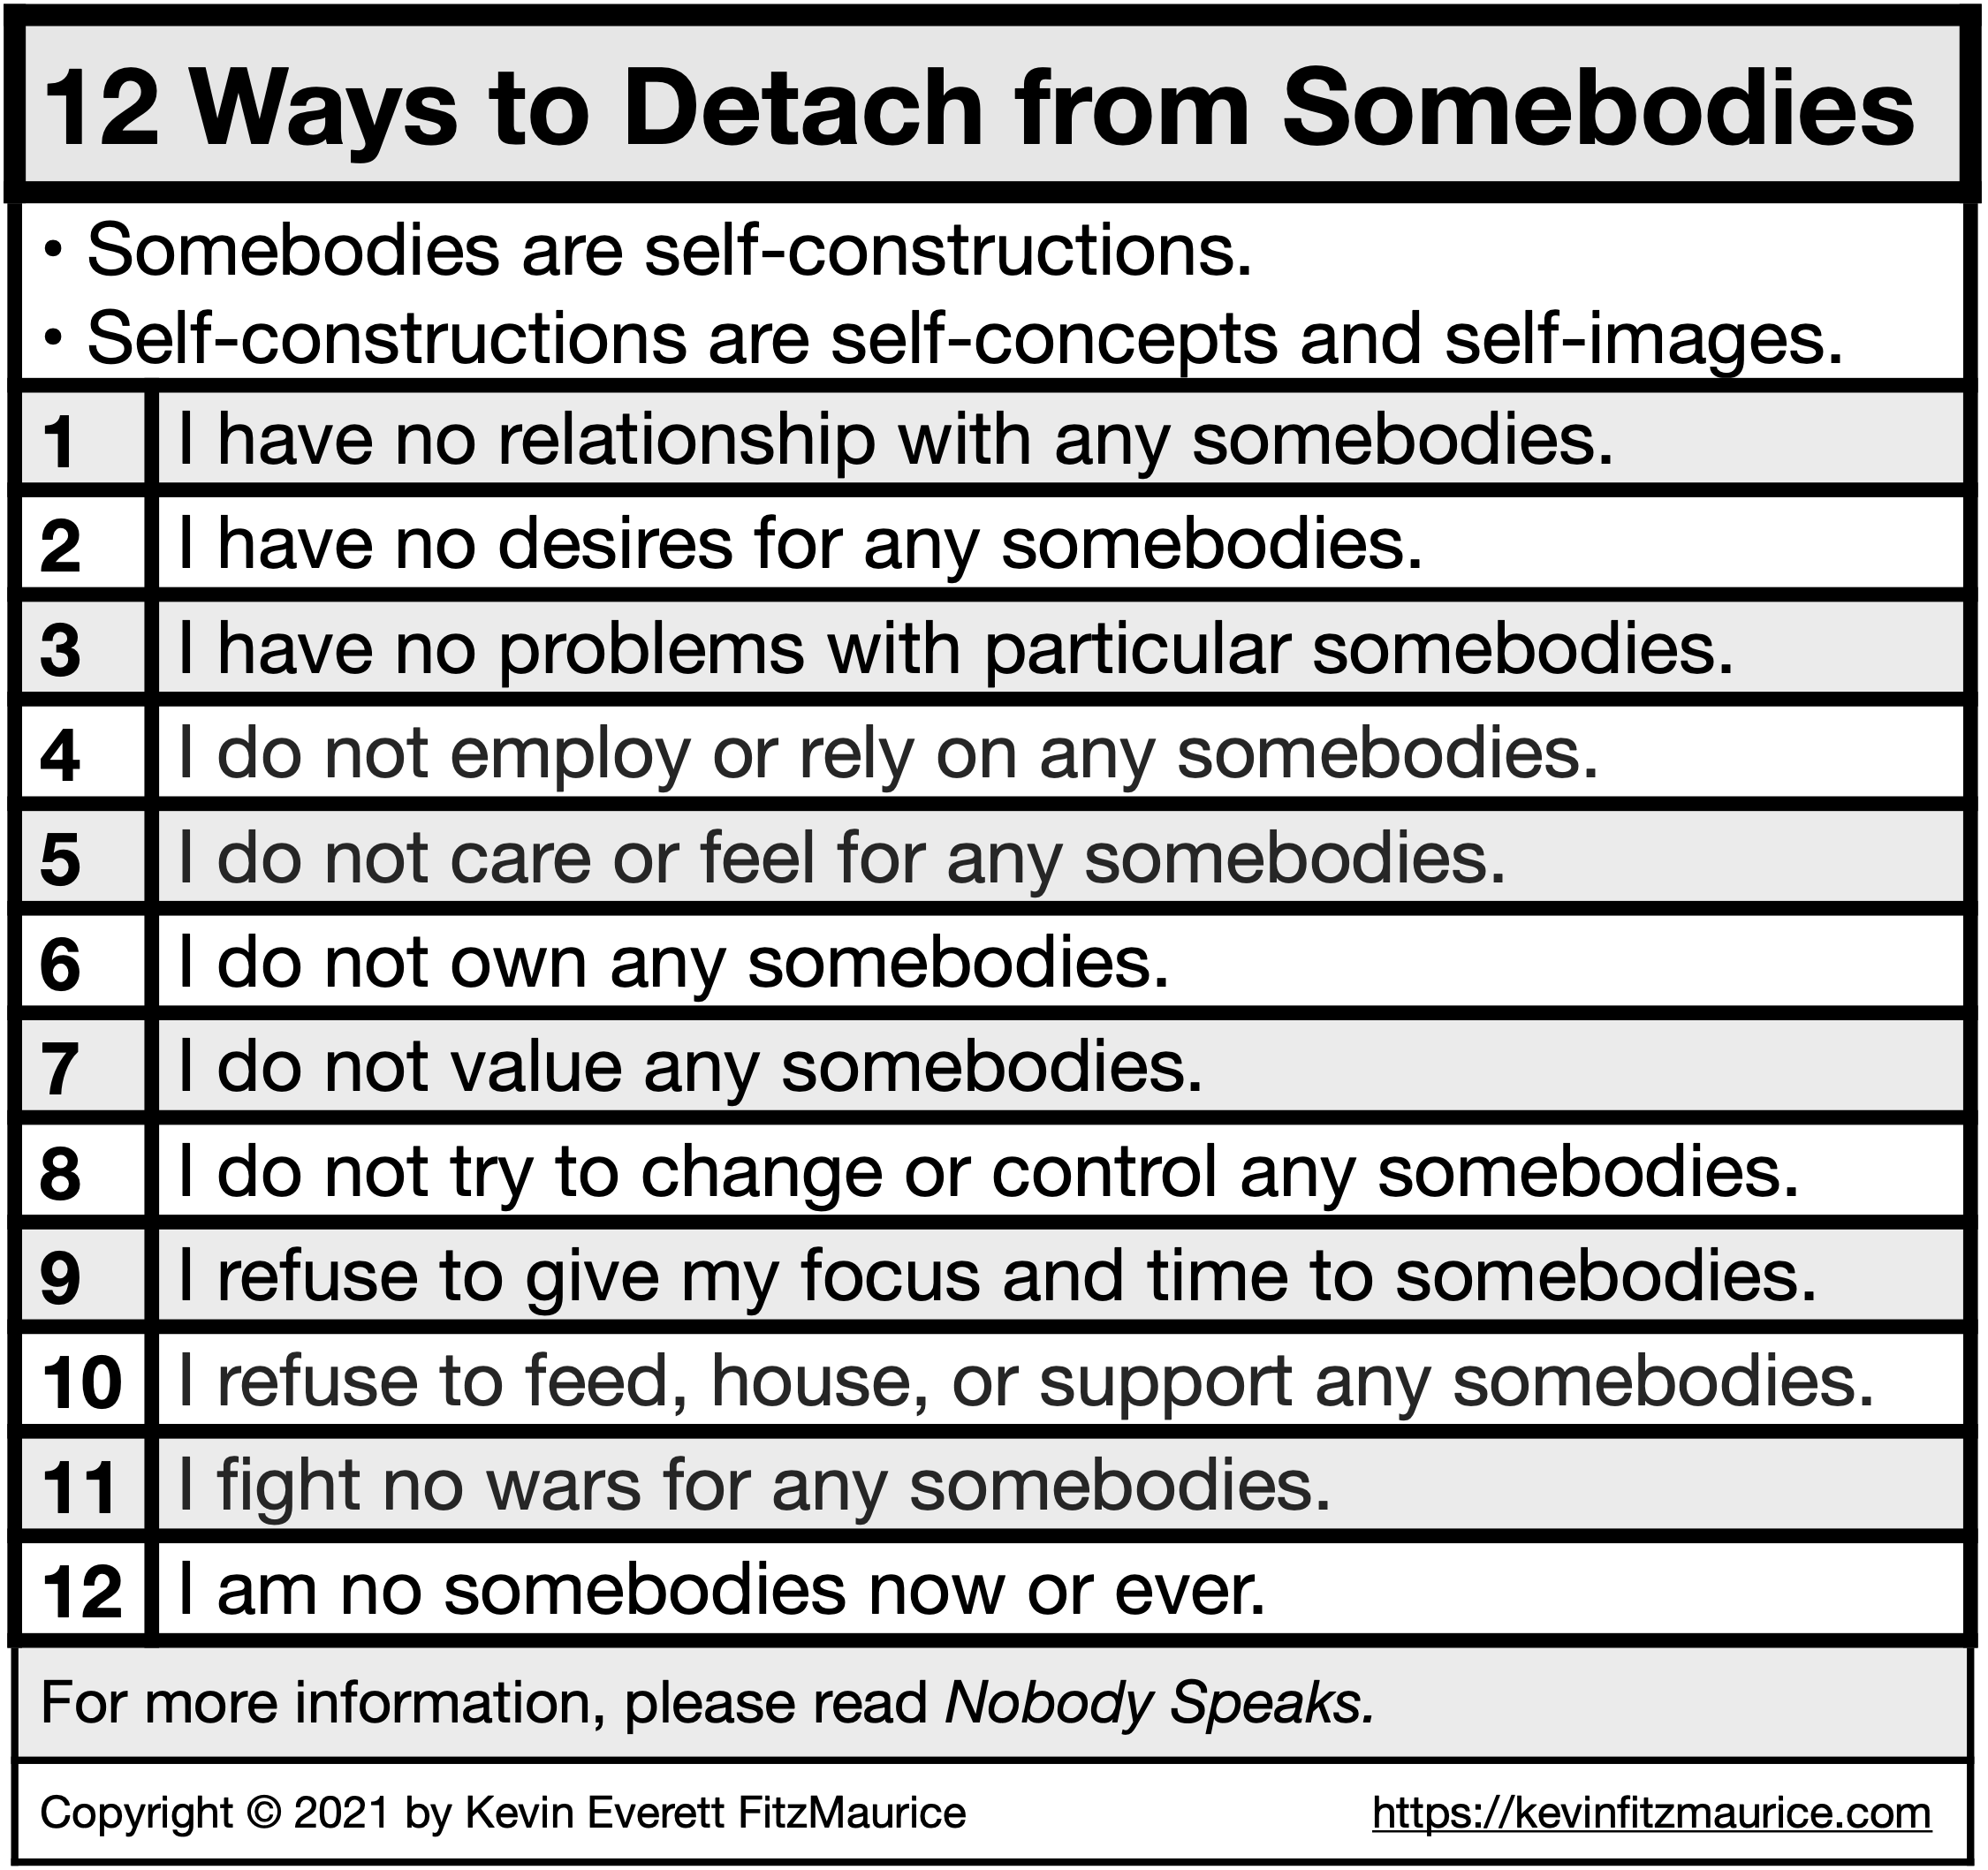 12 Ways to Detach from Being Somebodies